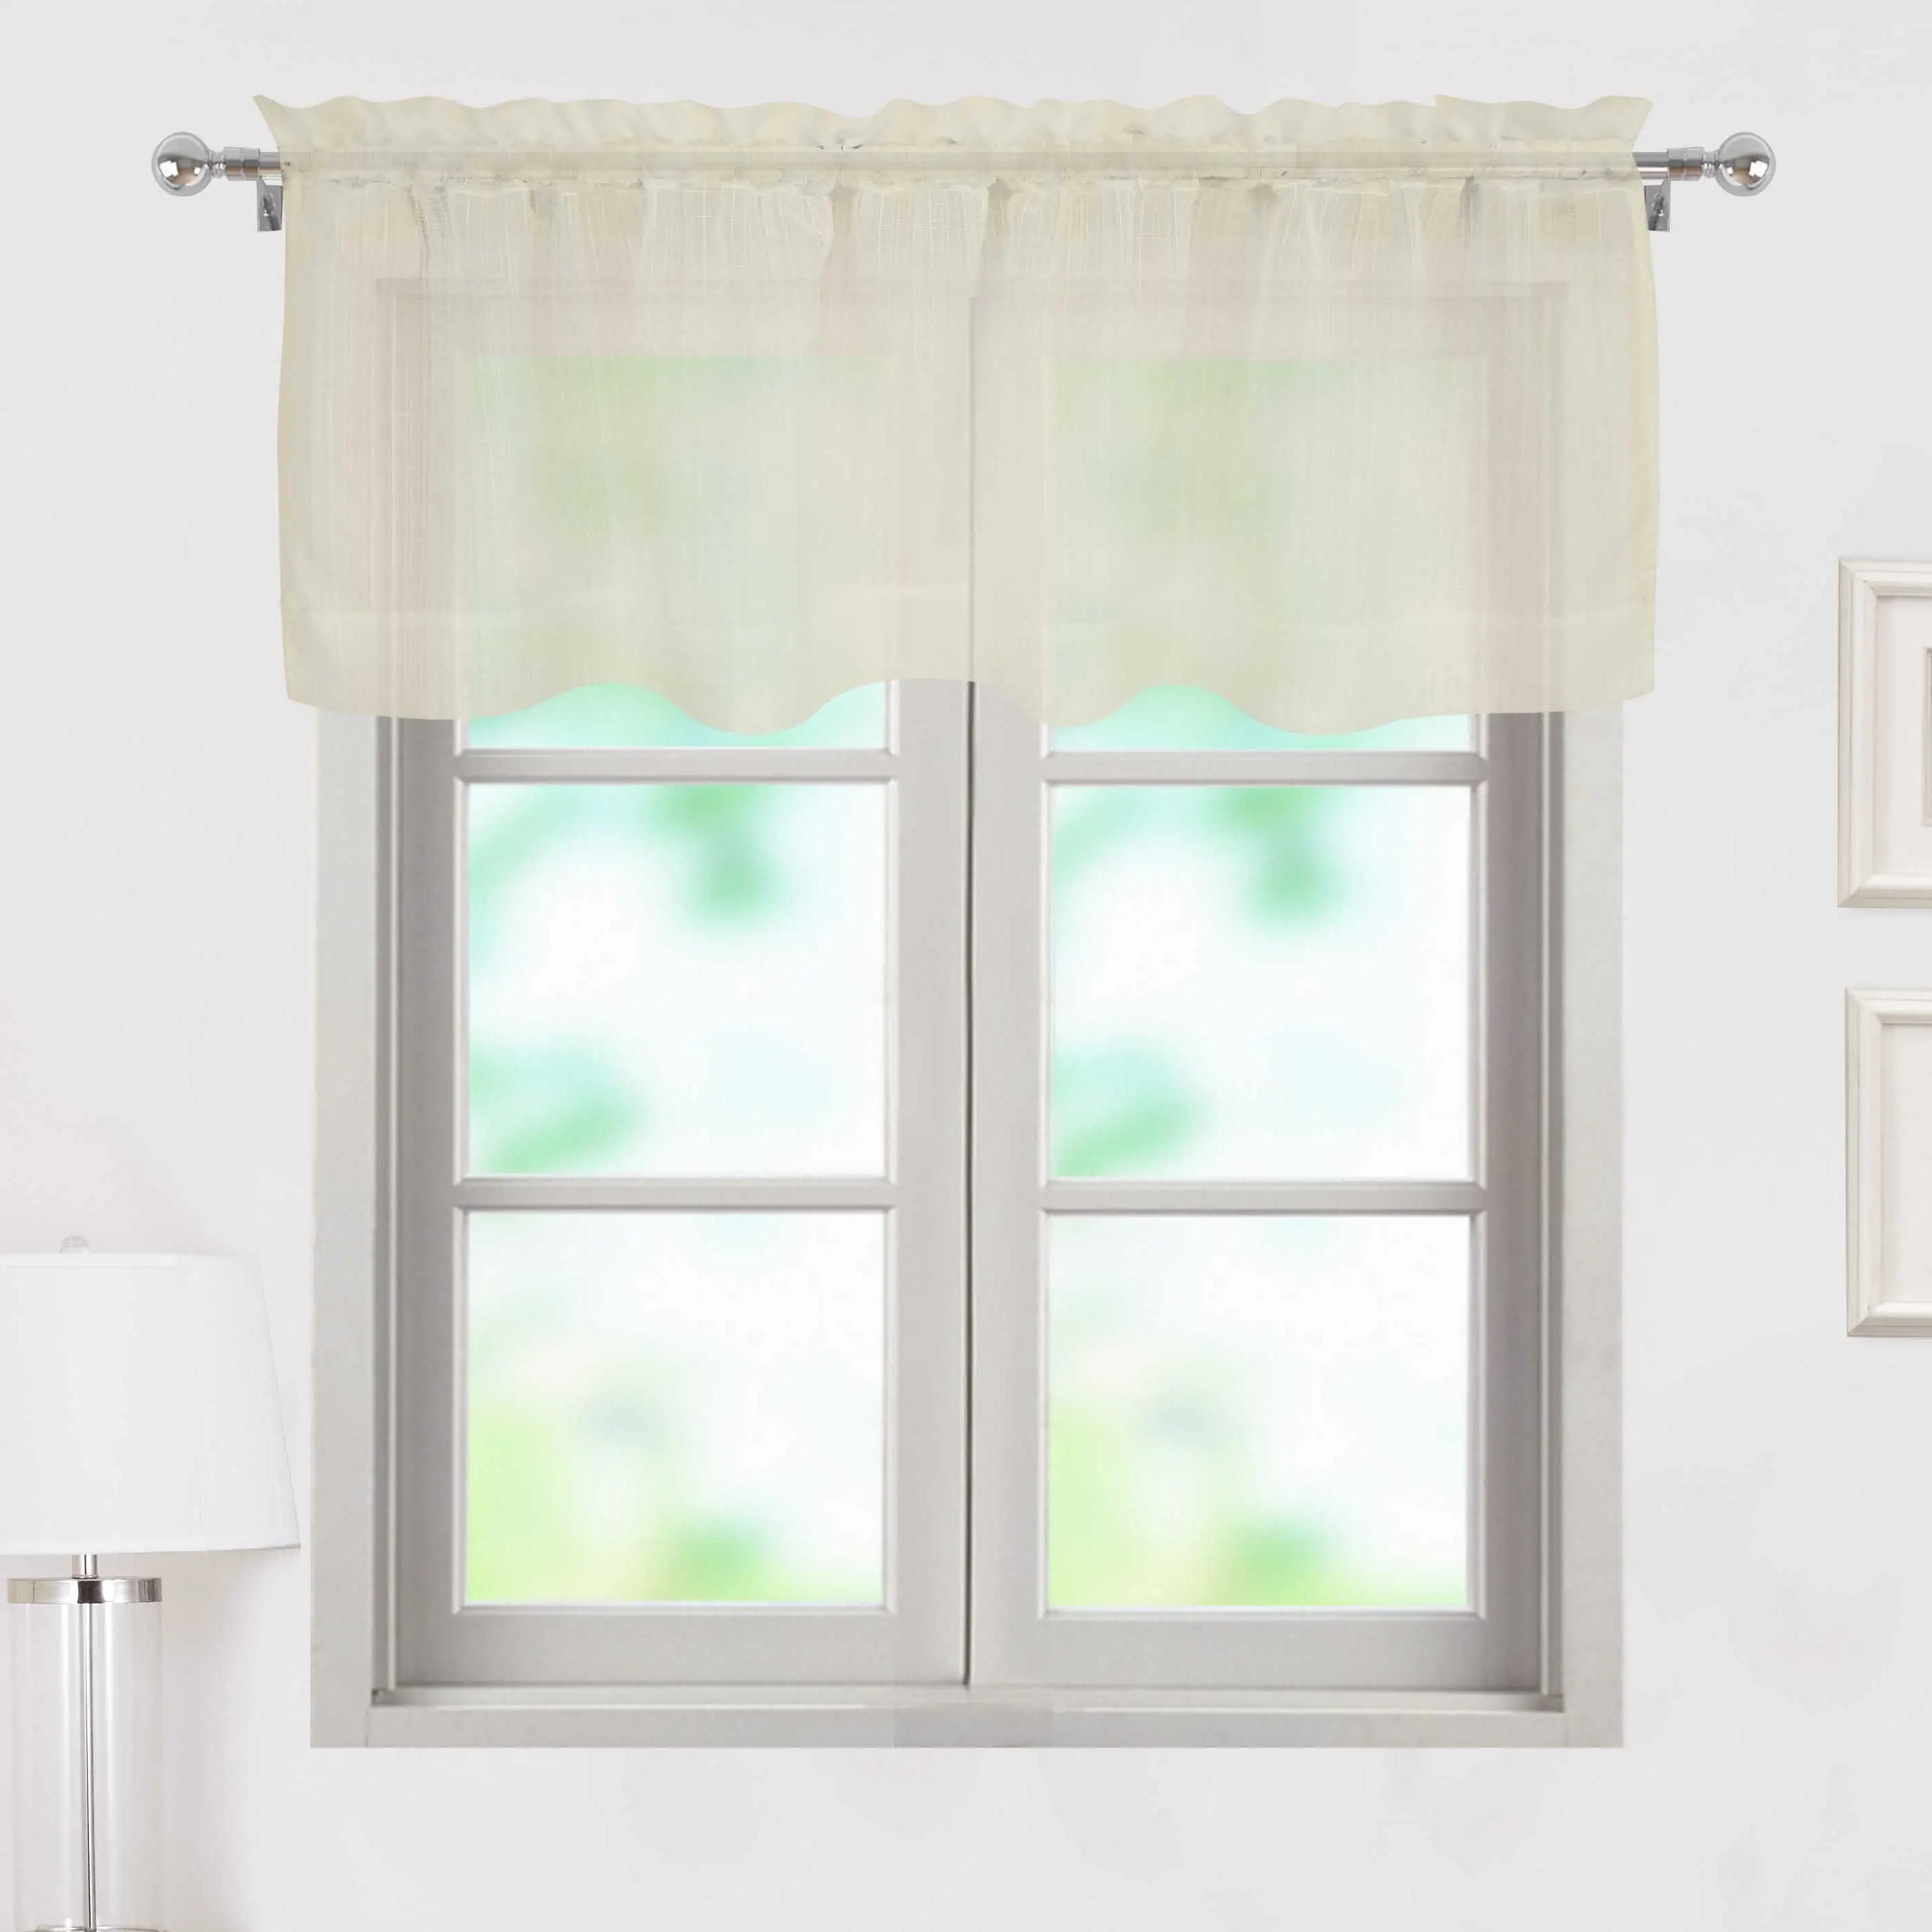 Cortina para sala de estar, venda quente de cortinas pequenas e feitas de marfim, para janela da sala de estar, 2021